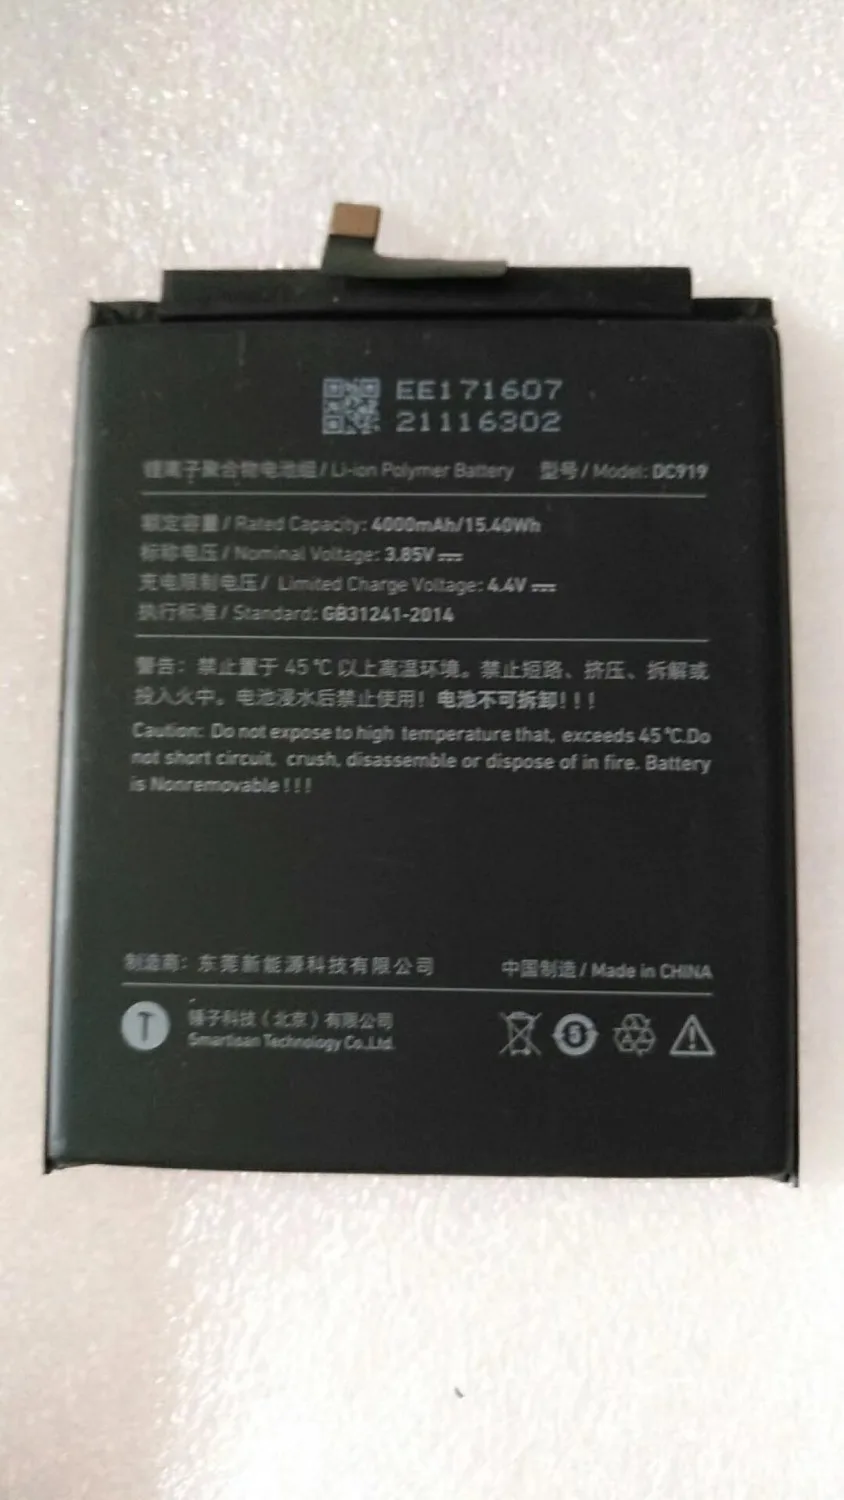 

Jinsuli 2018 NEW Mobile Phone Battery 3.85V 4000mAh DC919 For Smartisan Jianguo M1L Phone Batttery